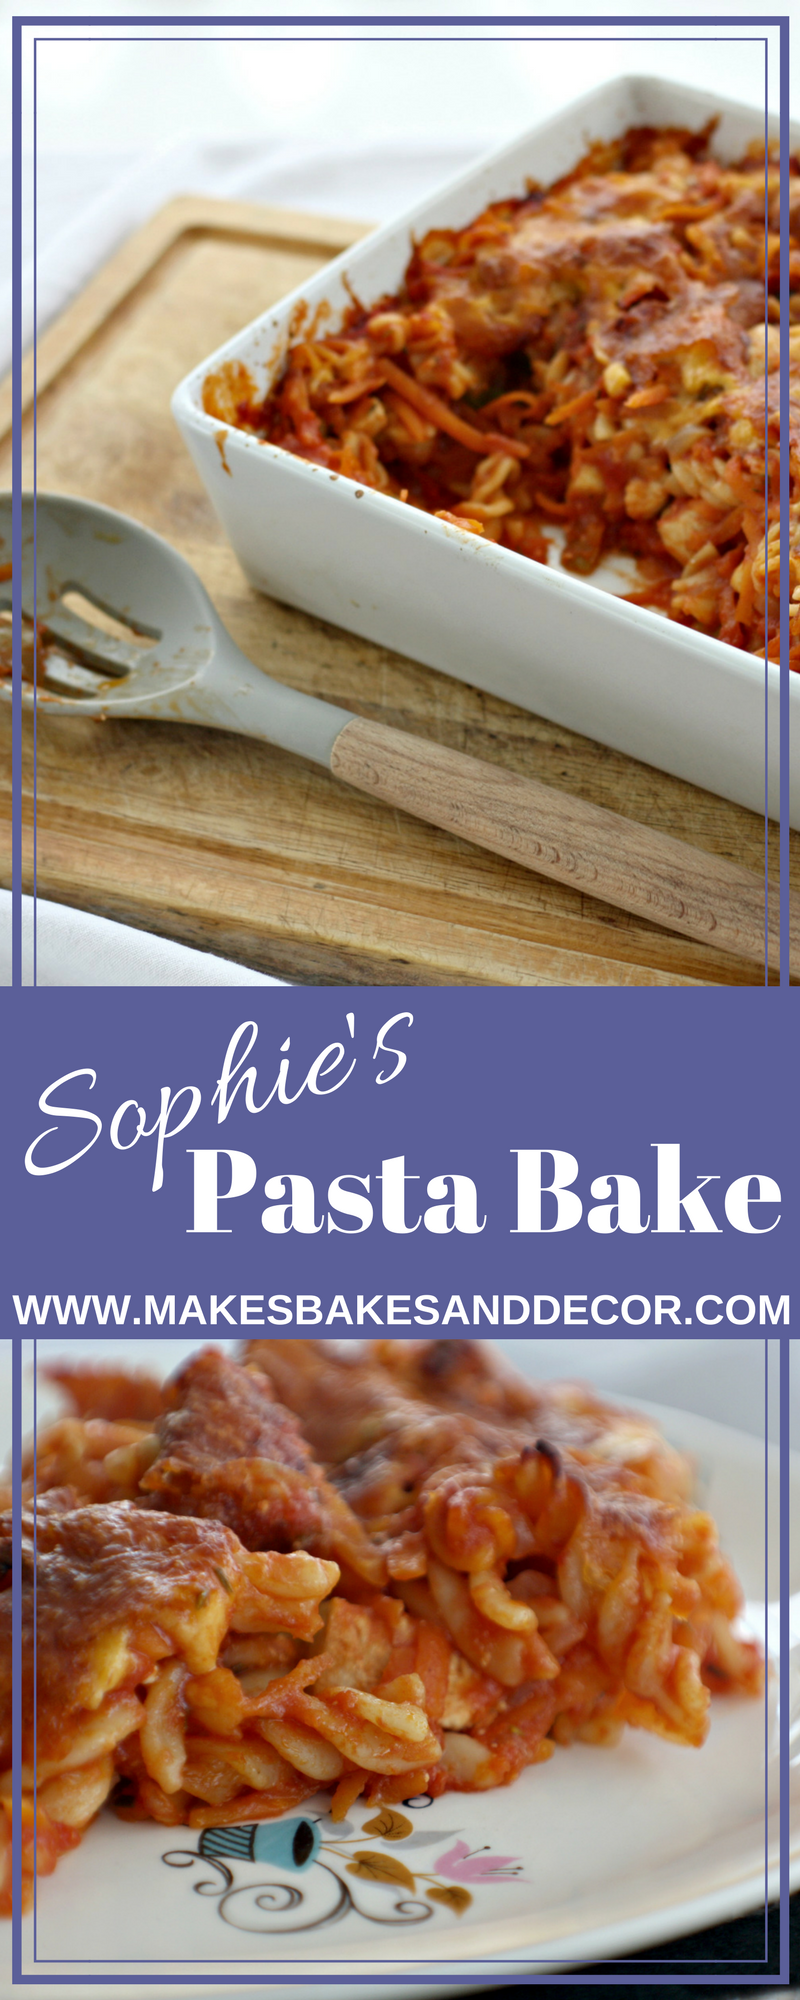 sophie's pasta bake